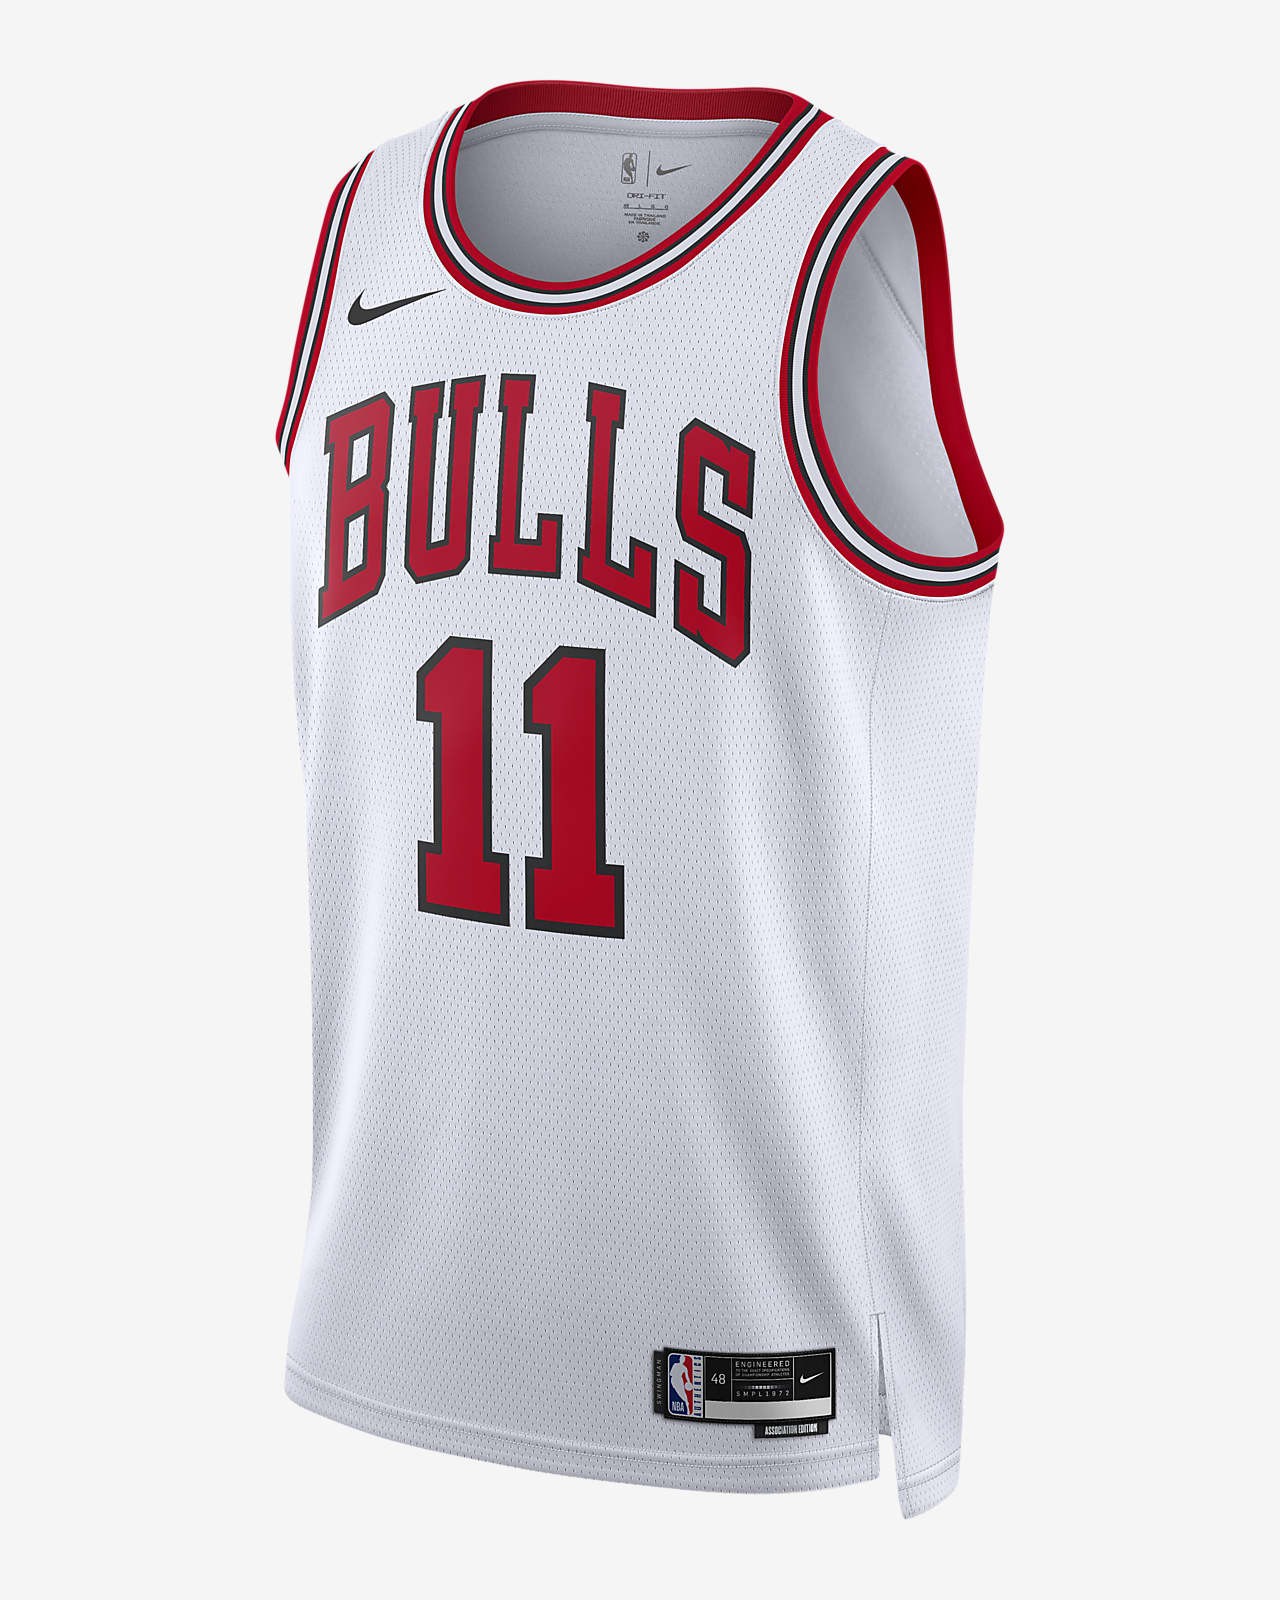 where to buy chicago bulls jersey